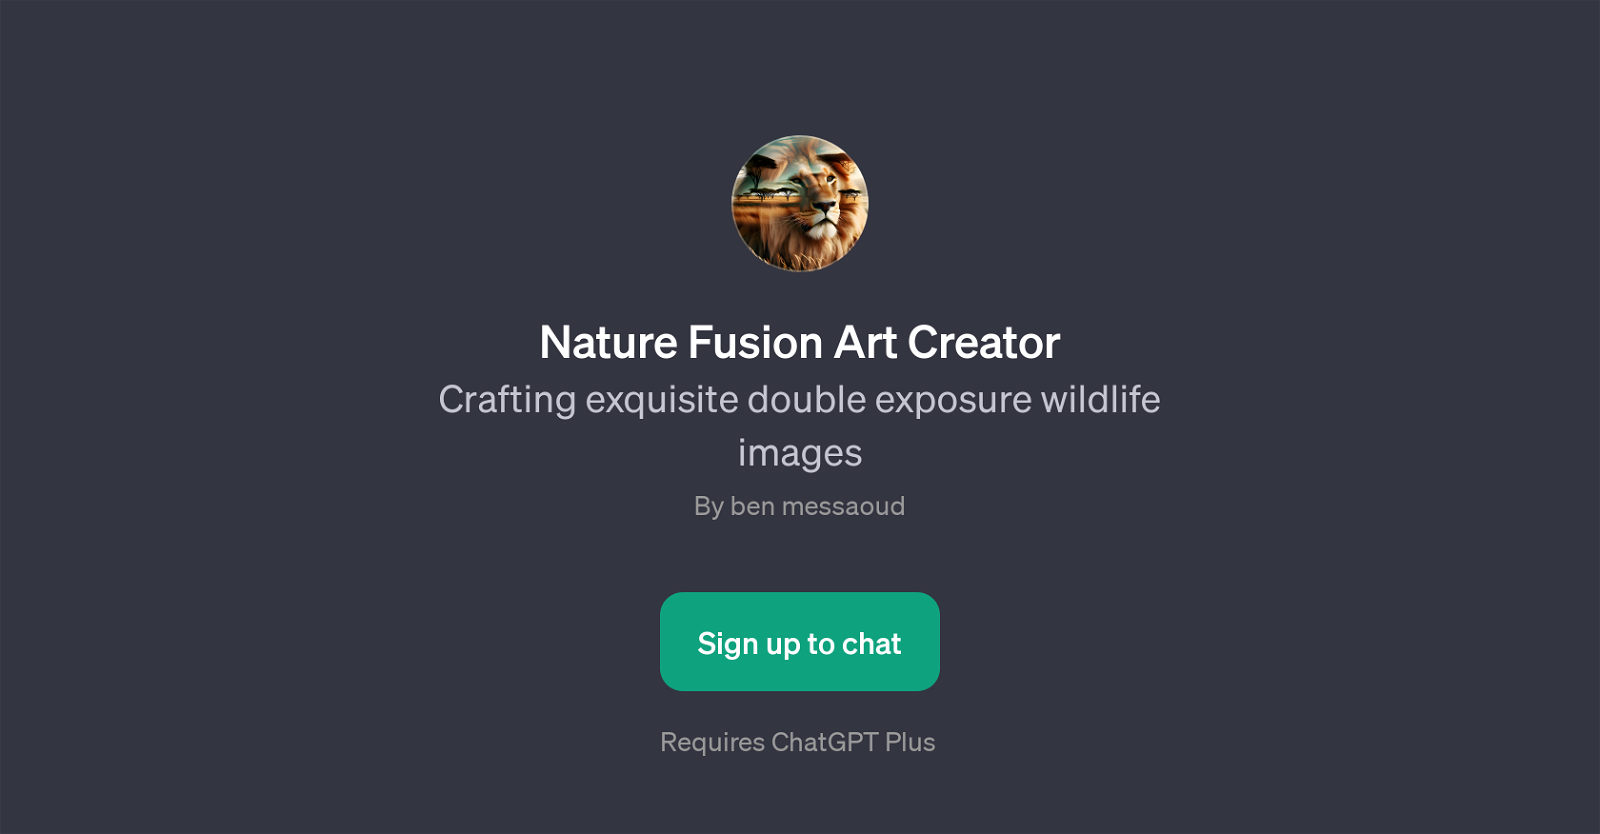 Nature Fusion Art Creator website